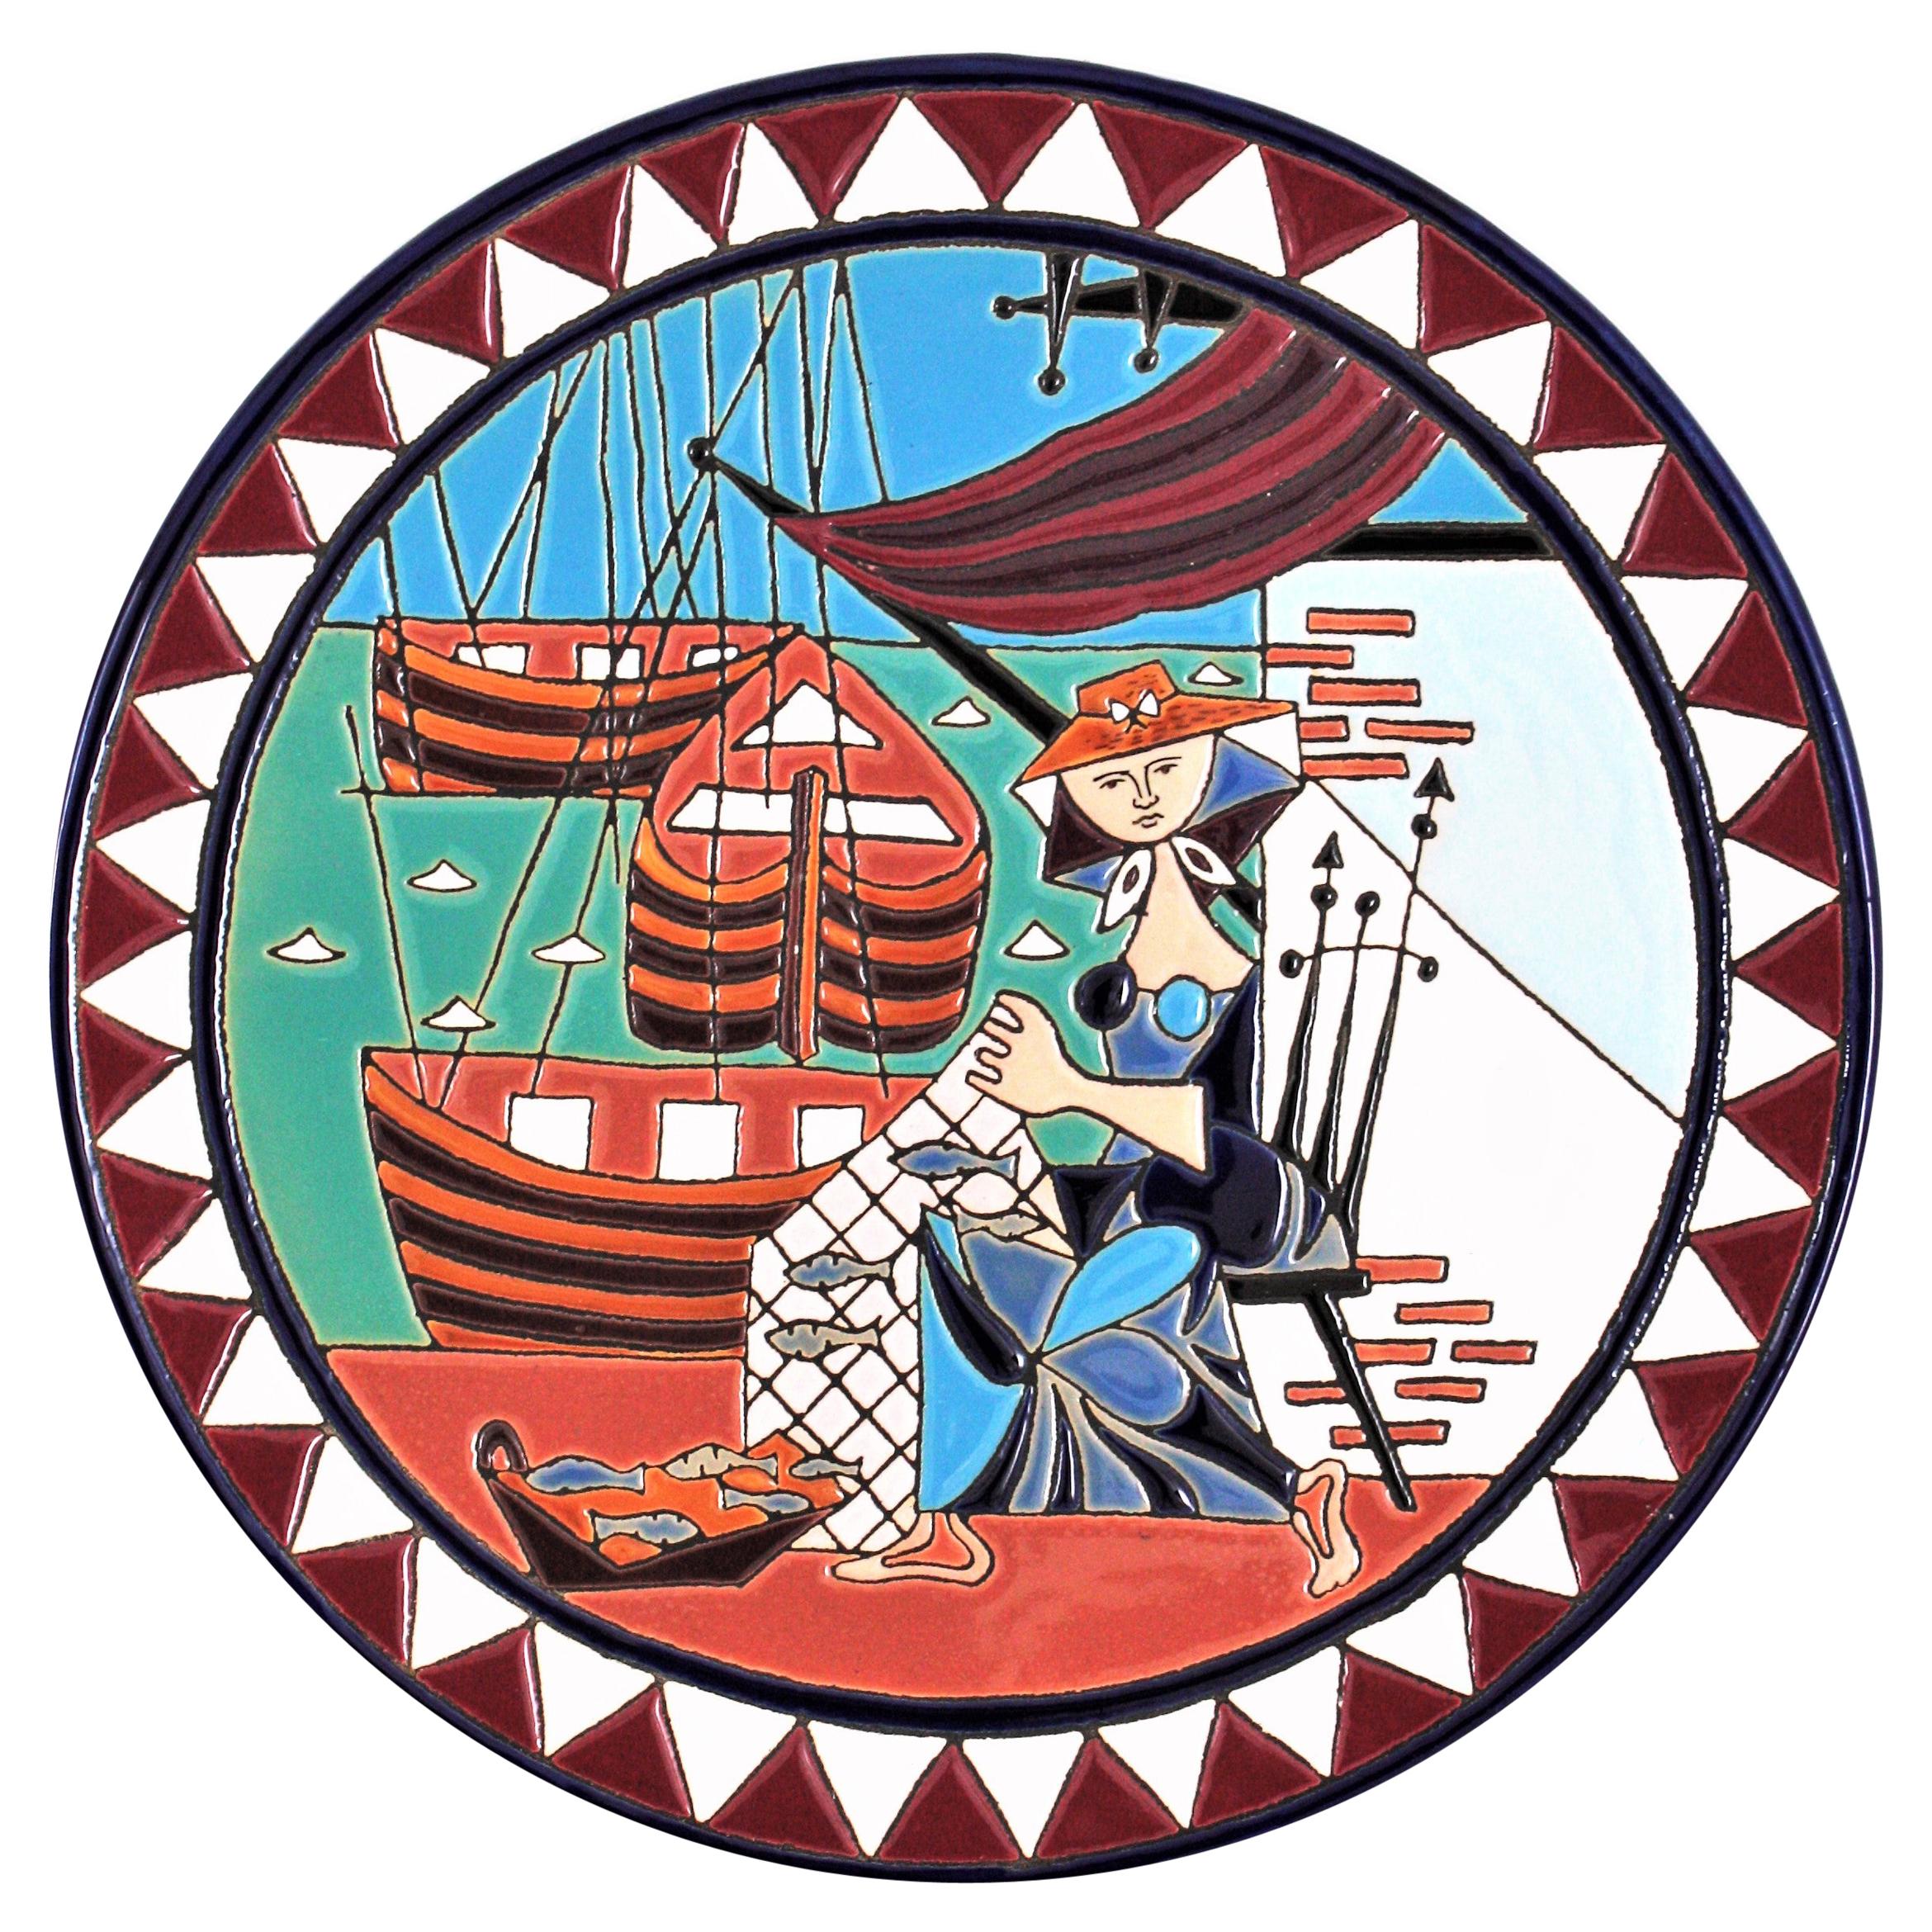 Spanish Ceramic Decorative Wall Plate with Fishing Scene